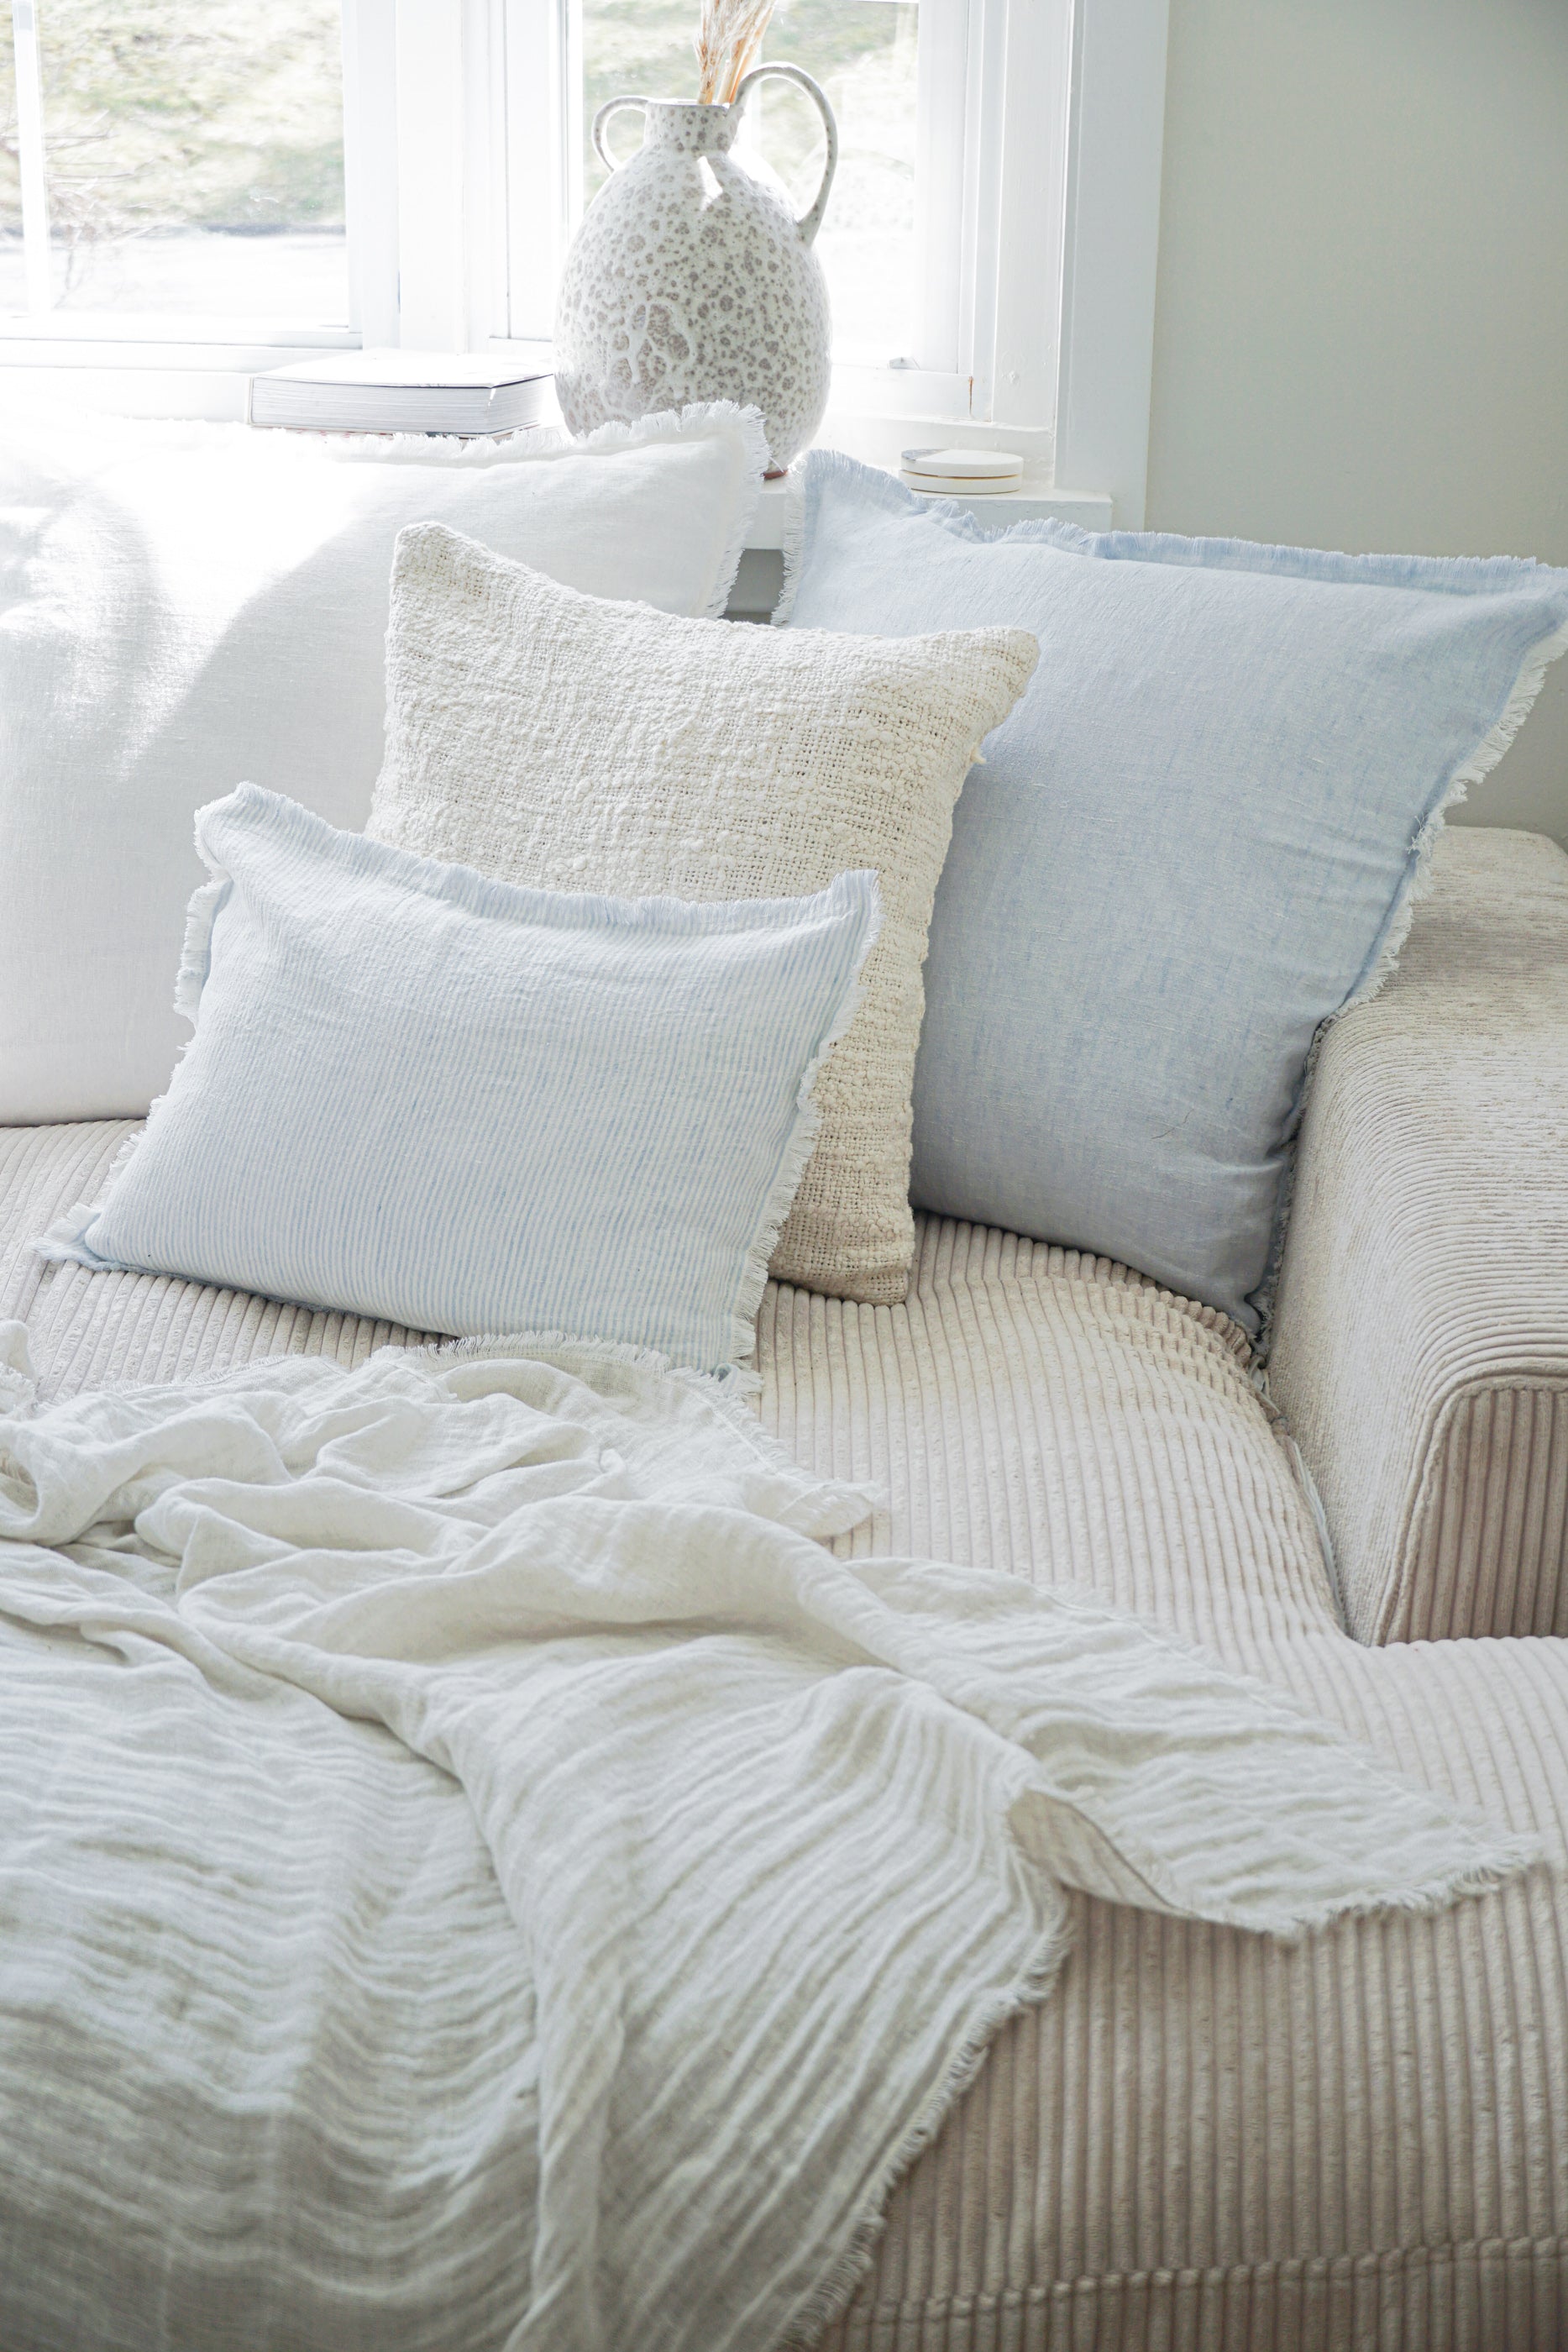 Sky Blue & White Striped So Soft Linen Pillow